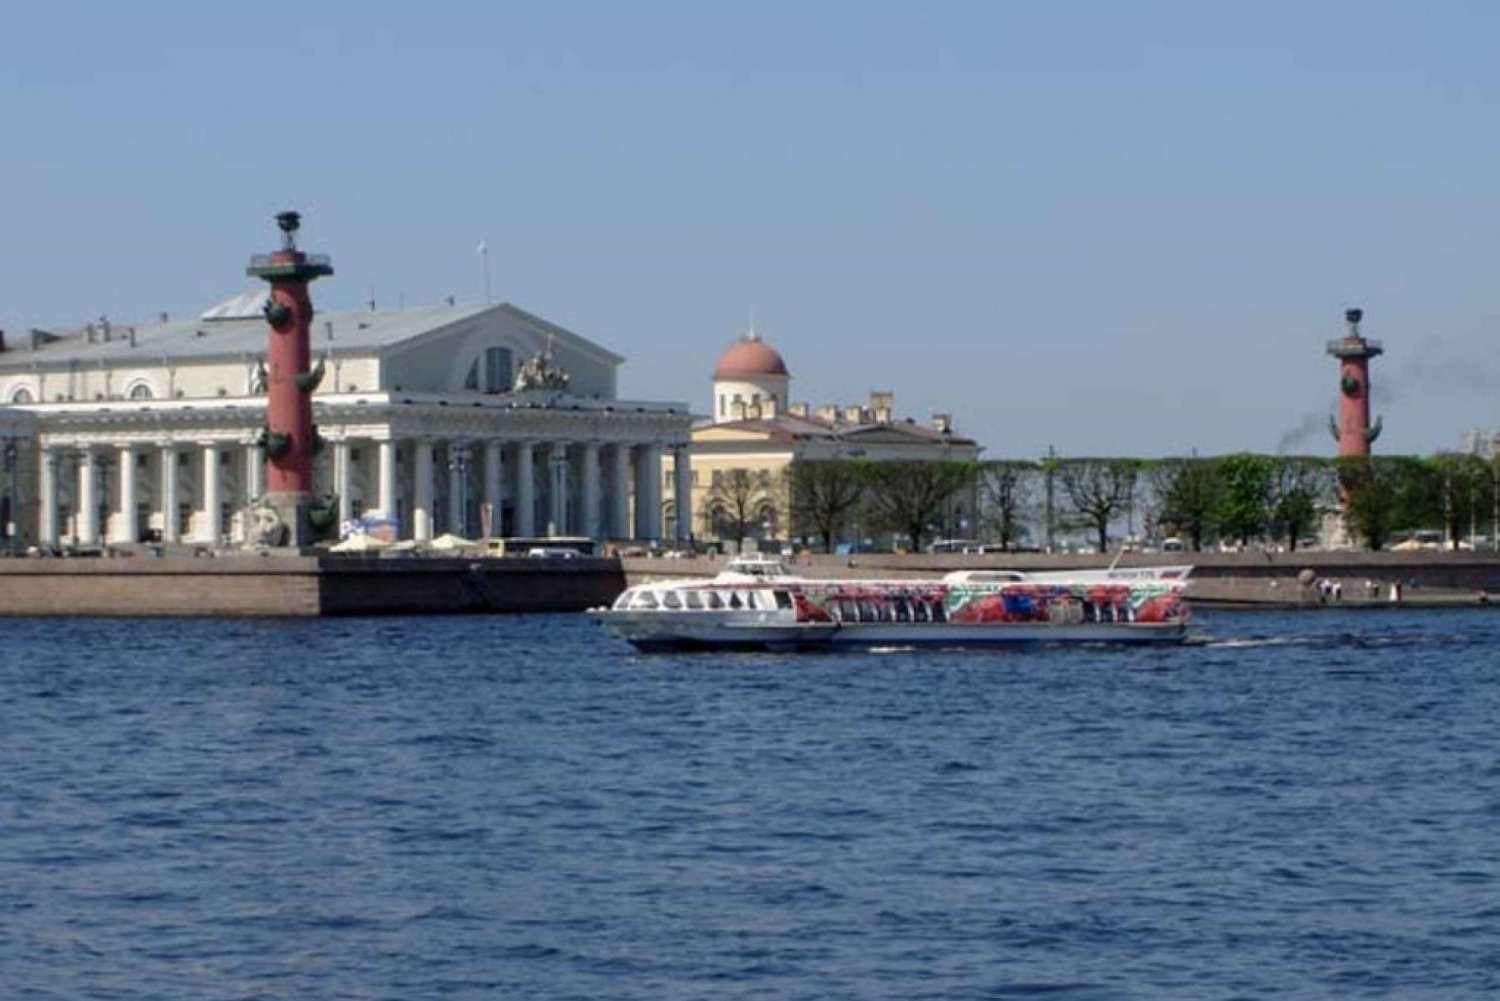 St Petersburg Boat Trip and Walking Tour